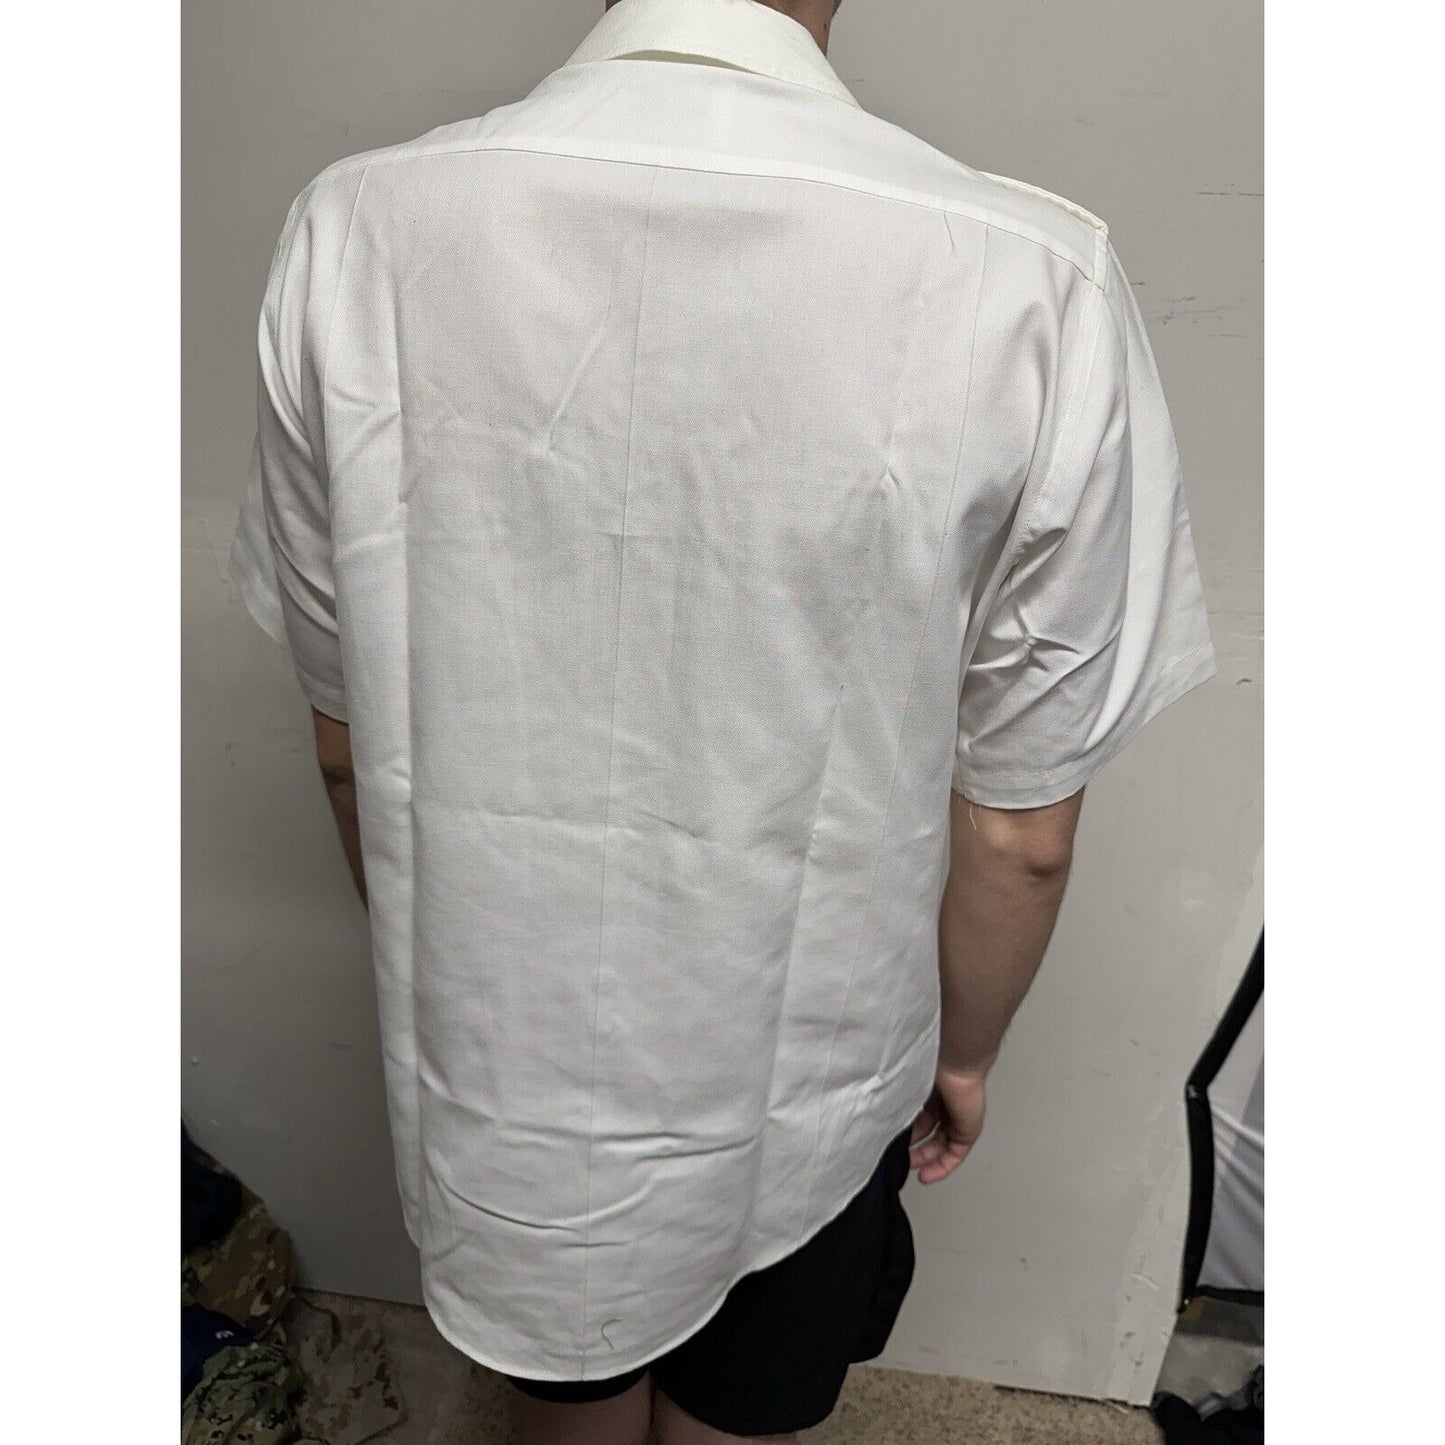 Army Men’s 16c Short Sleeve Button Up White Uniform Shirt